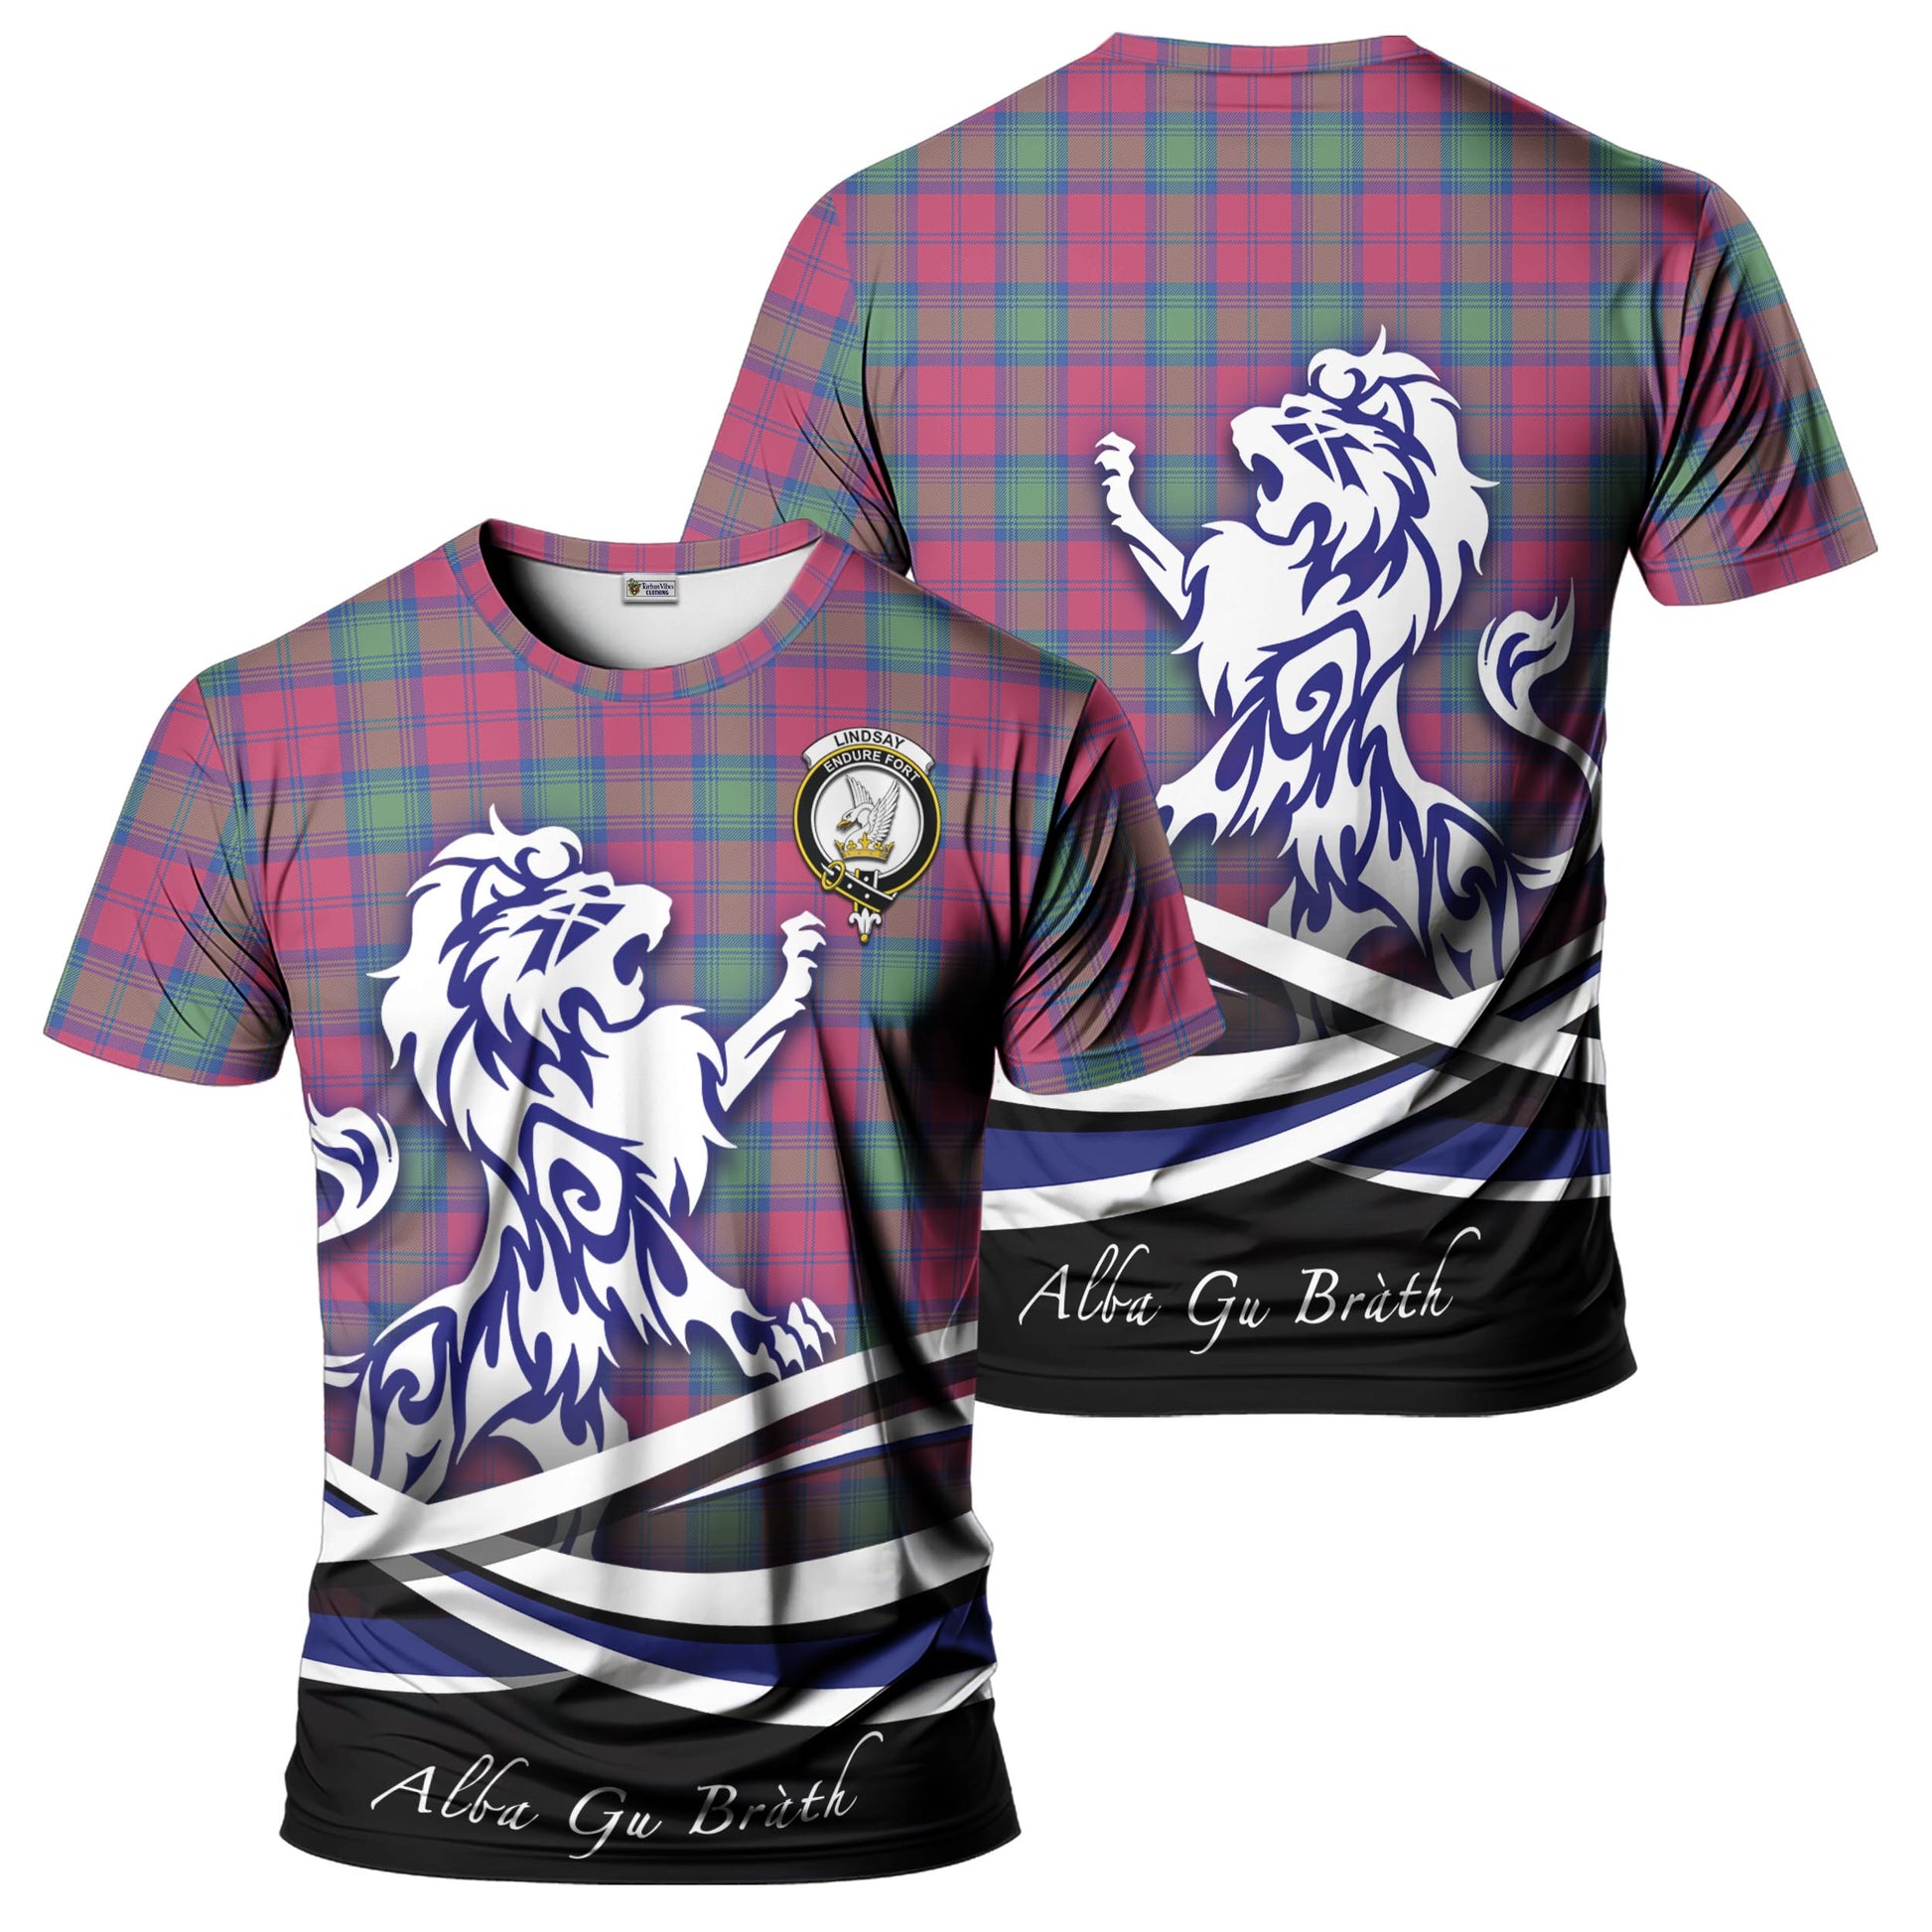 lindsay-ancient-tartan-t-shirt-with-alba-gu-brath-regal-lion-emblem